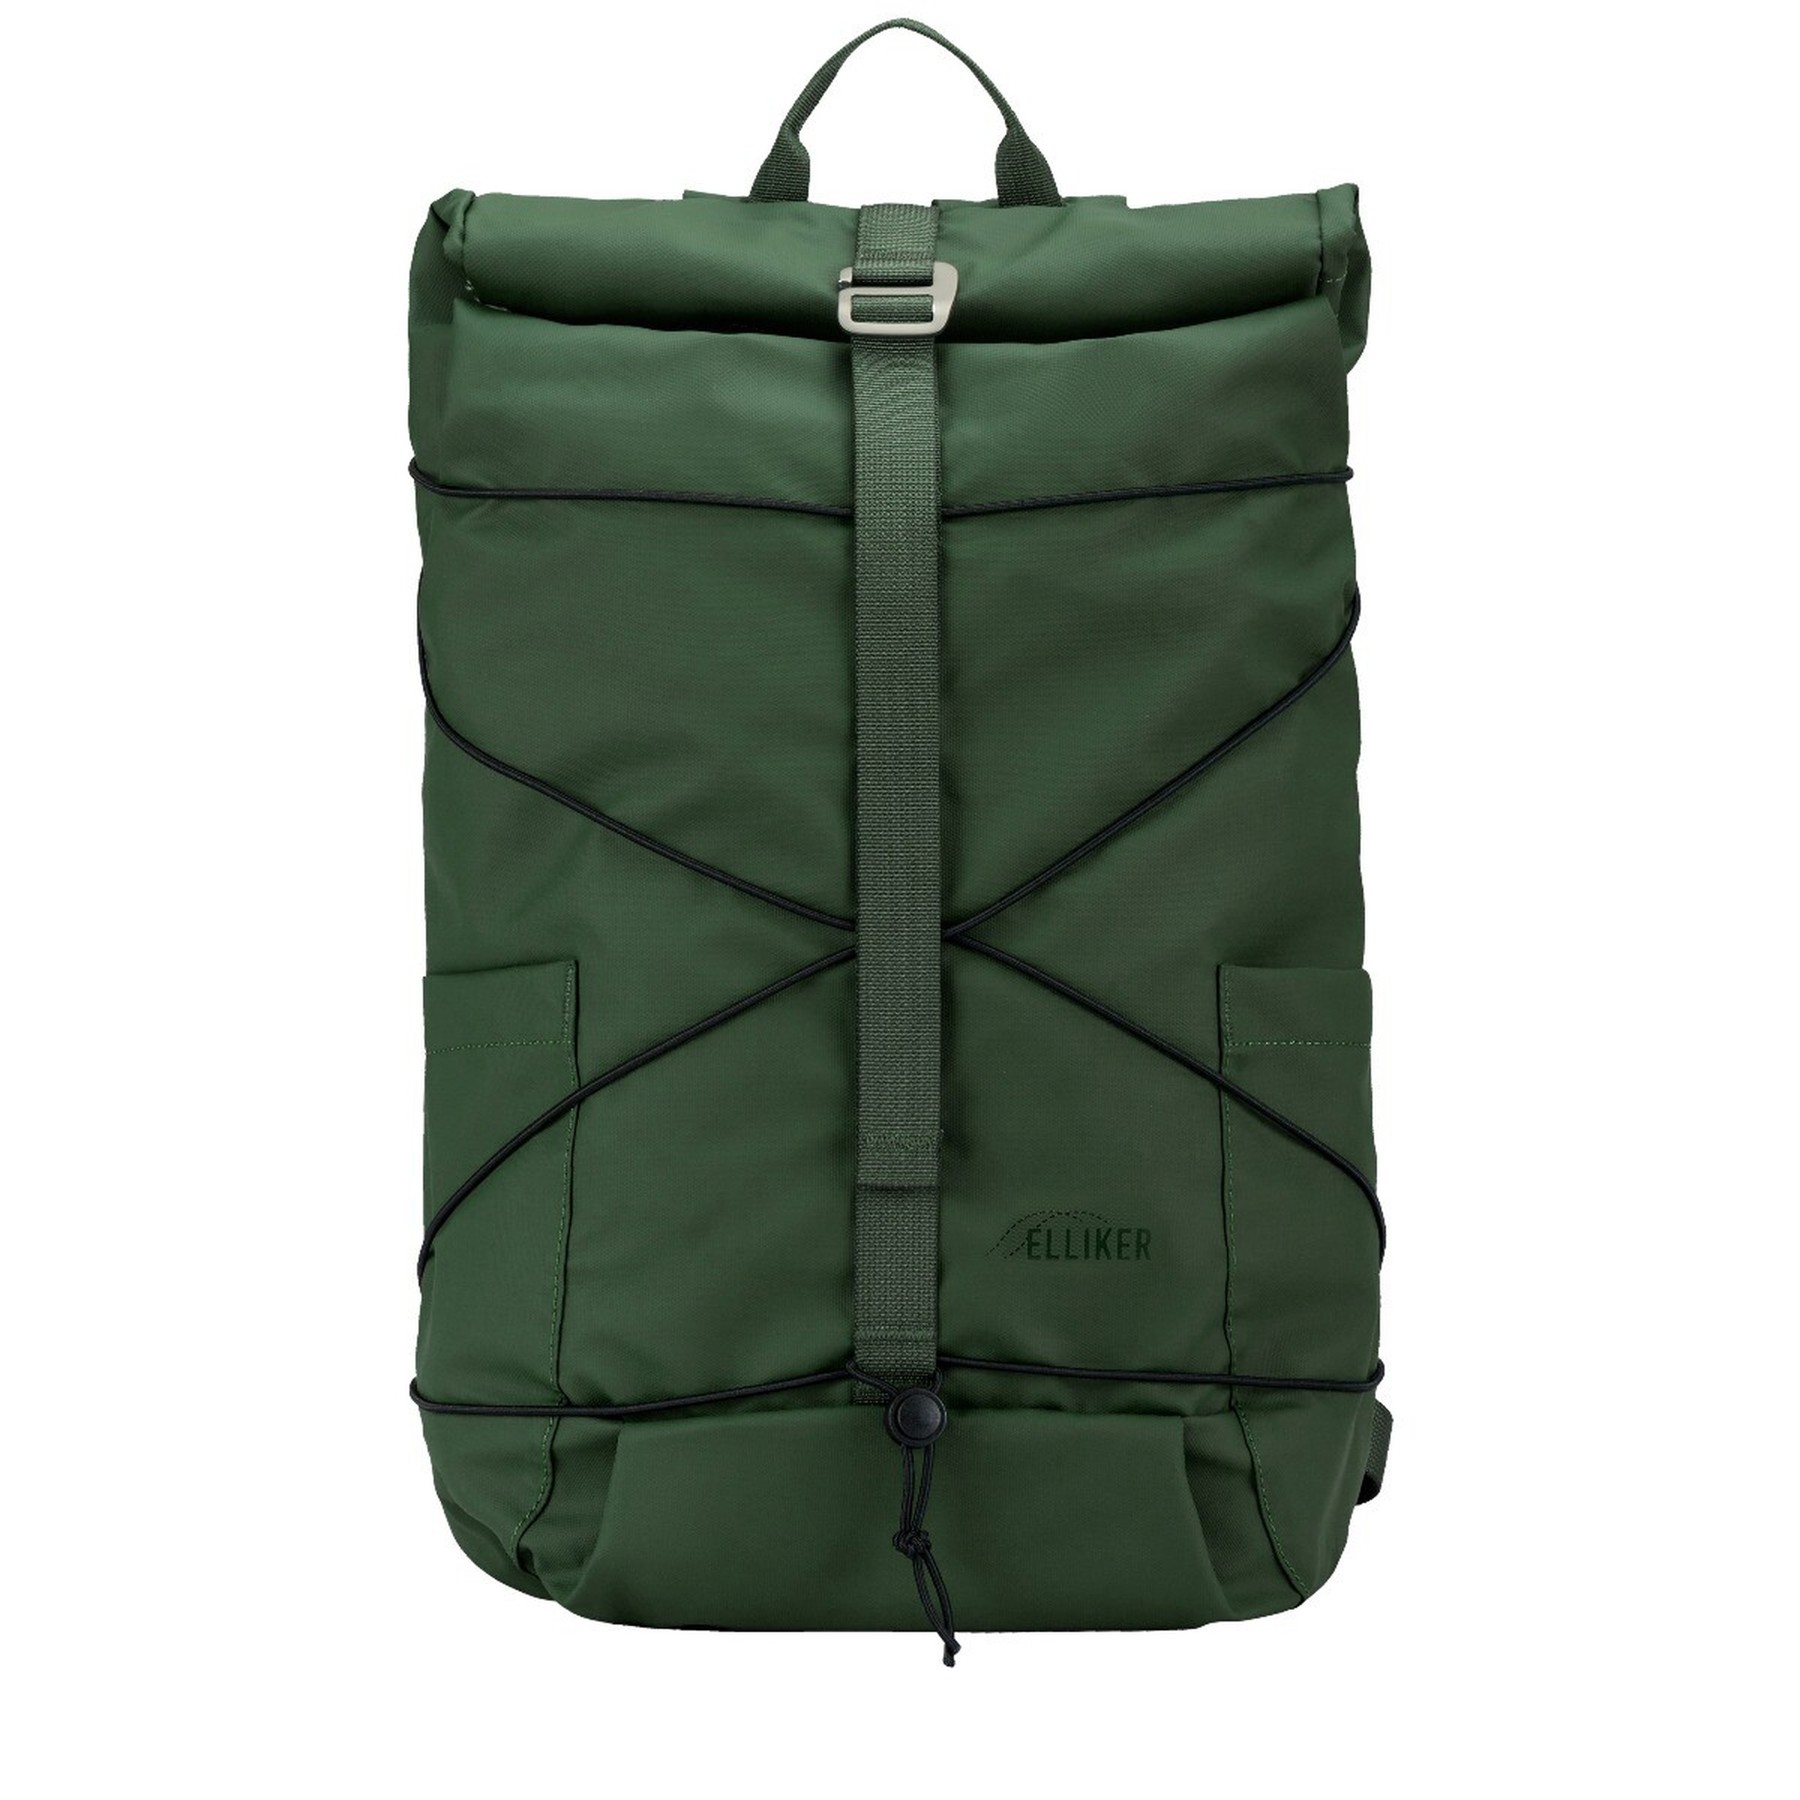 A large dark green backpack